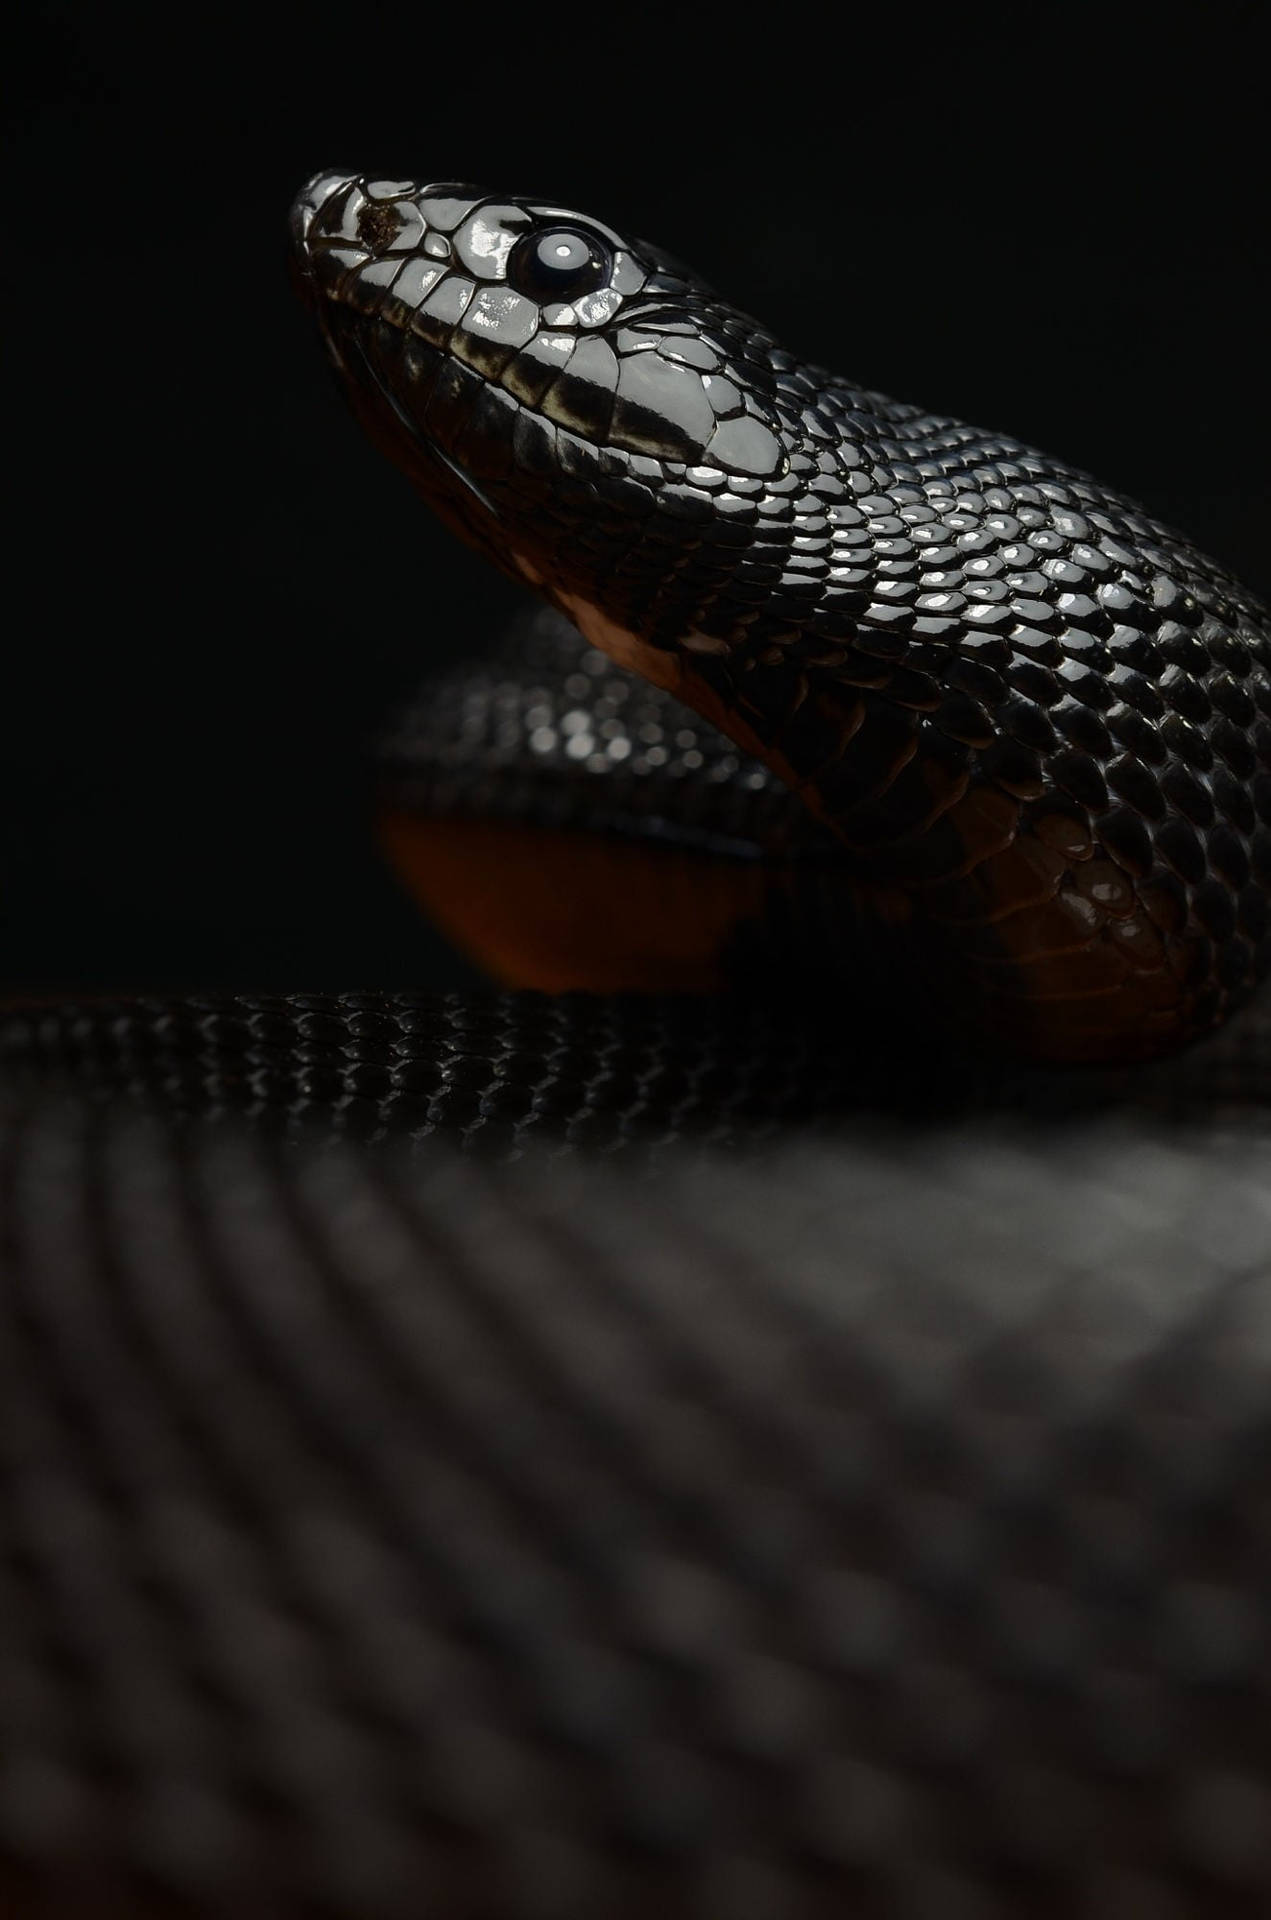 Black Mamba Snake Looking Upward Wallpaper